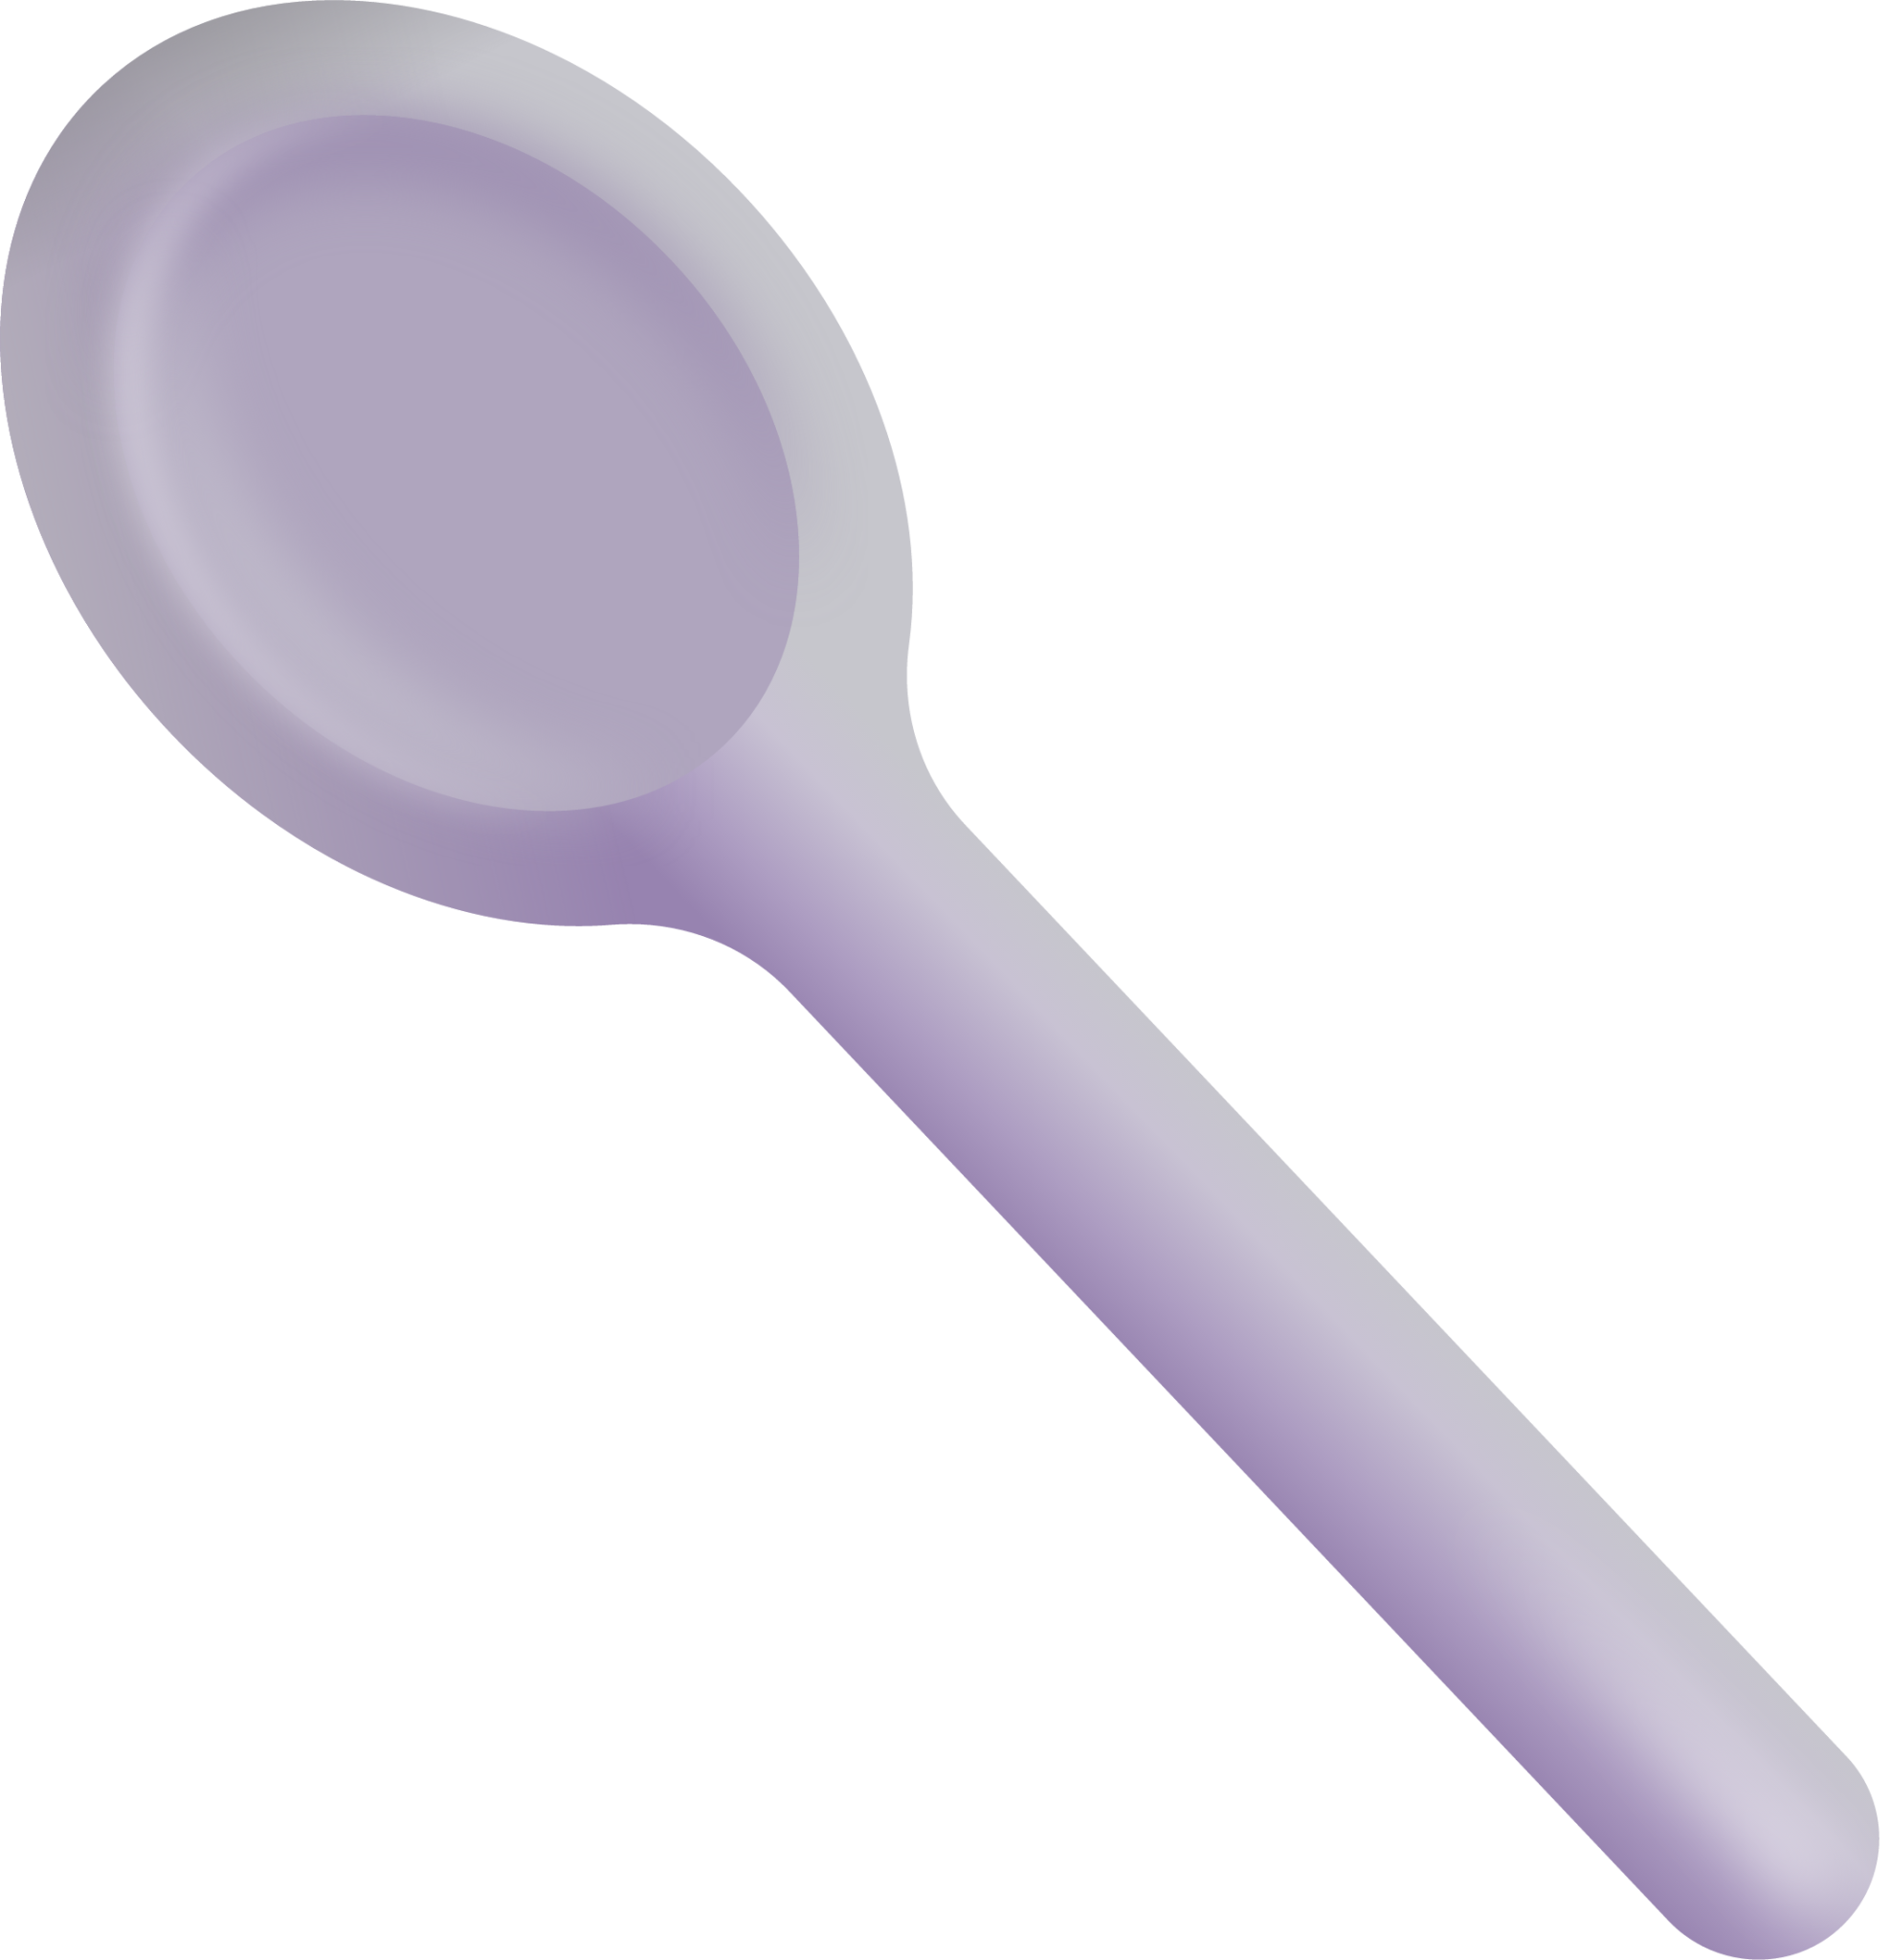 spoon emoji